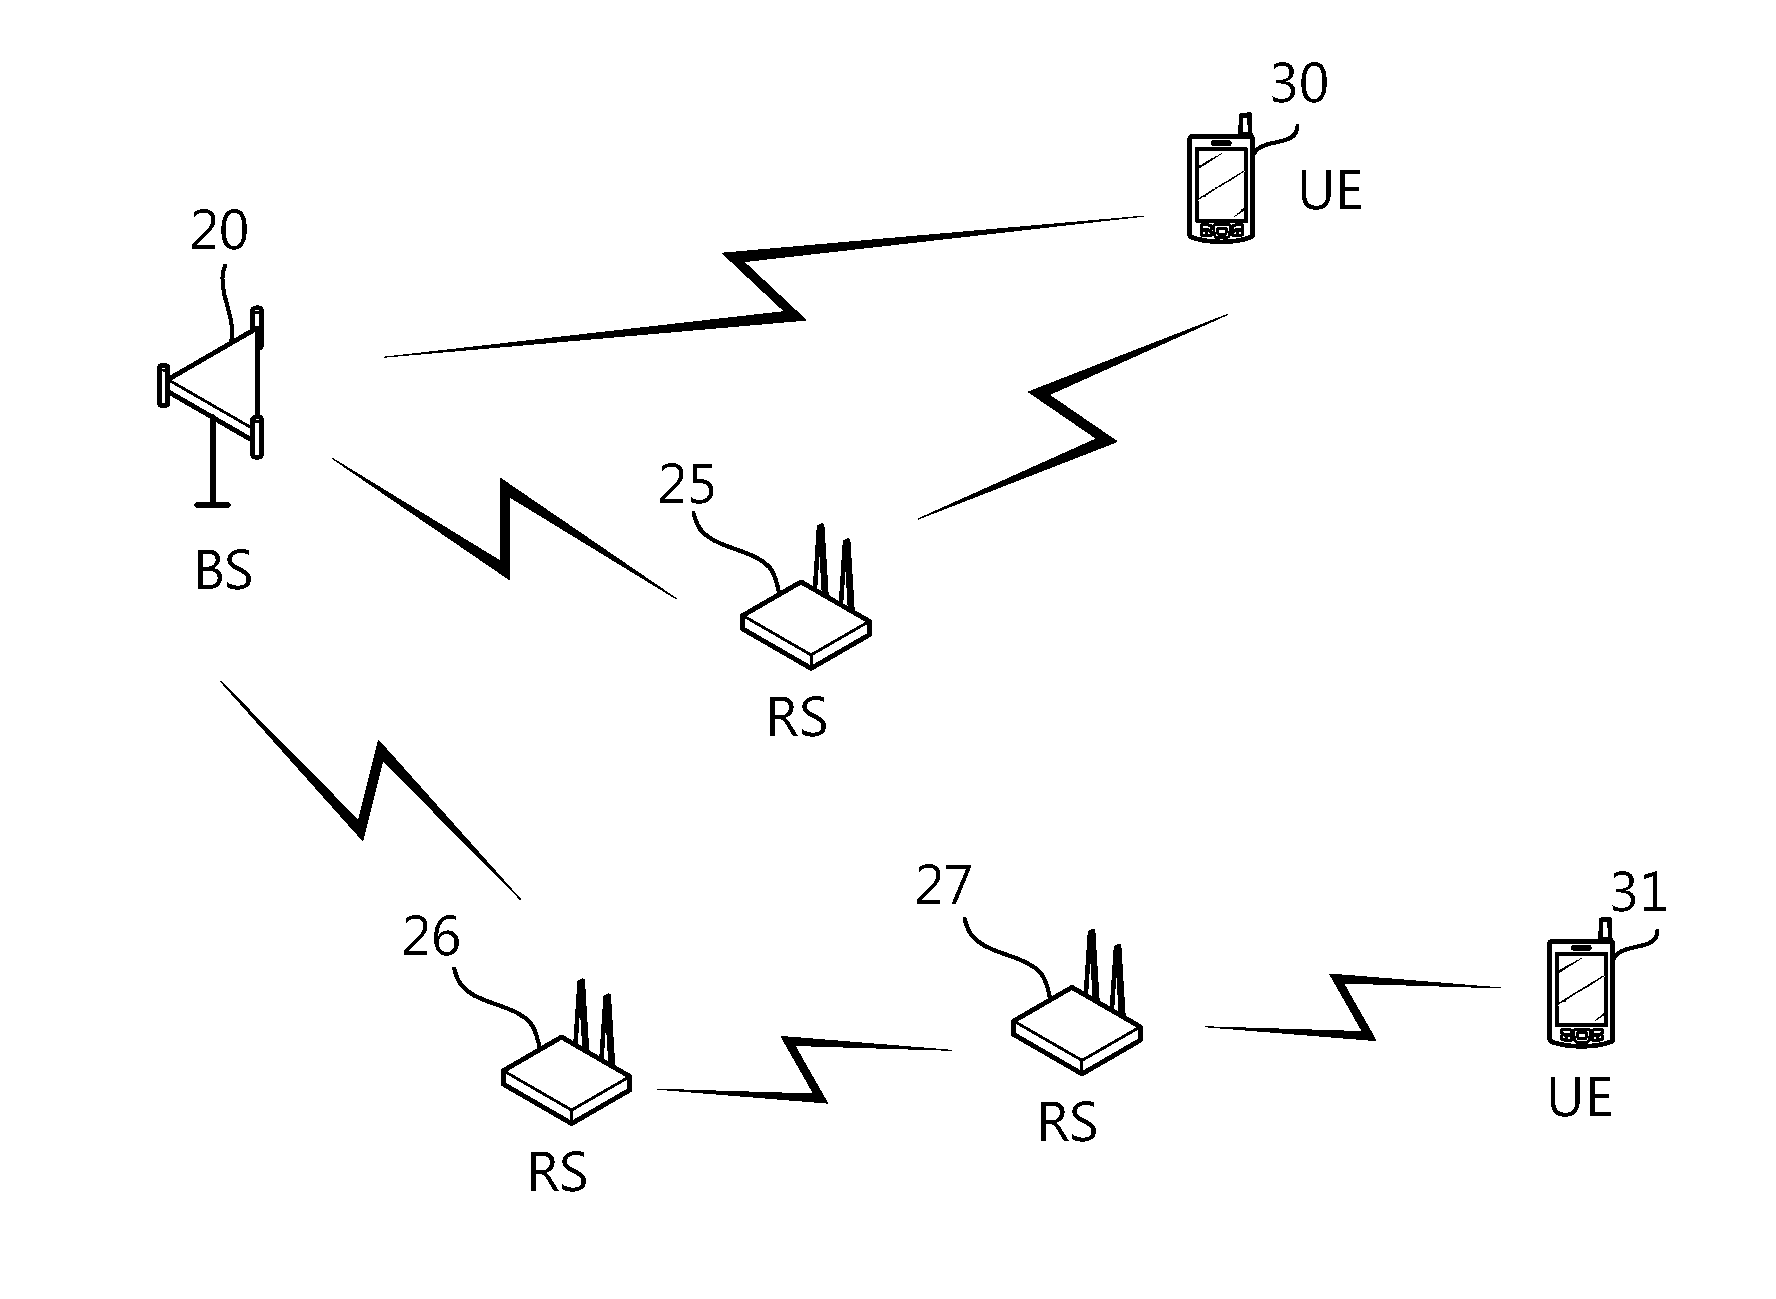 Signal transmission method using mbsfn subframe in radio communication system